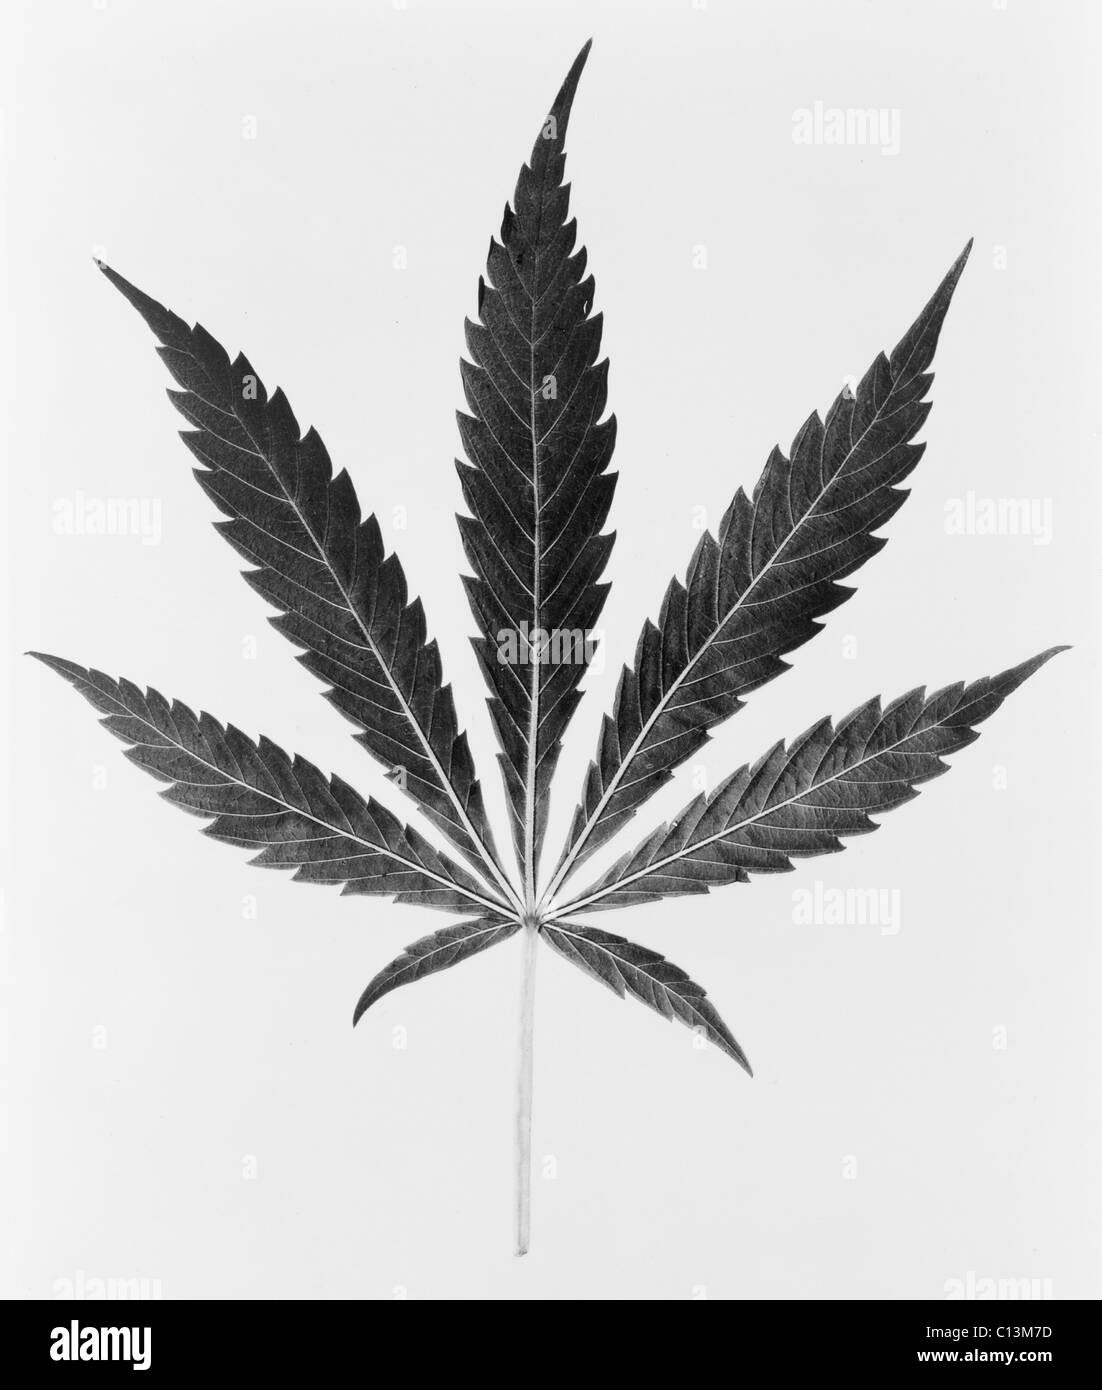 Federal Bureau of Narcotics illustration of a Marijuana leaf. Ca. 1950. Stock Photo